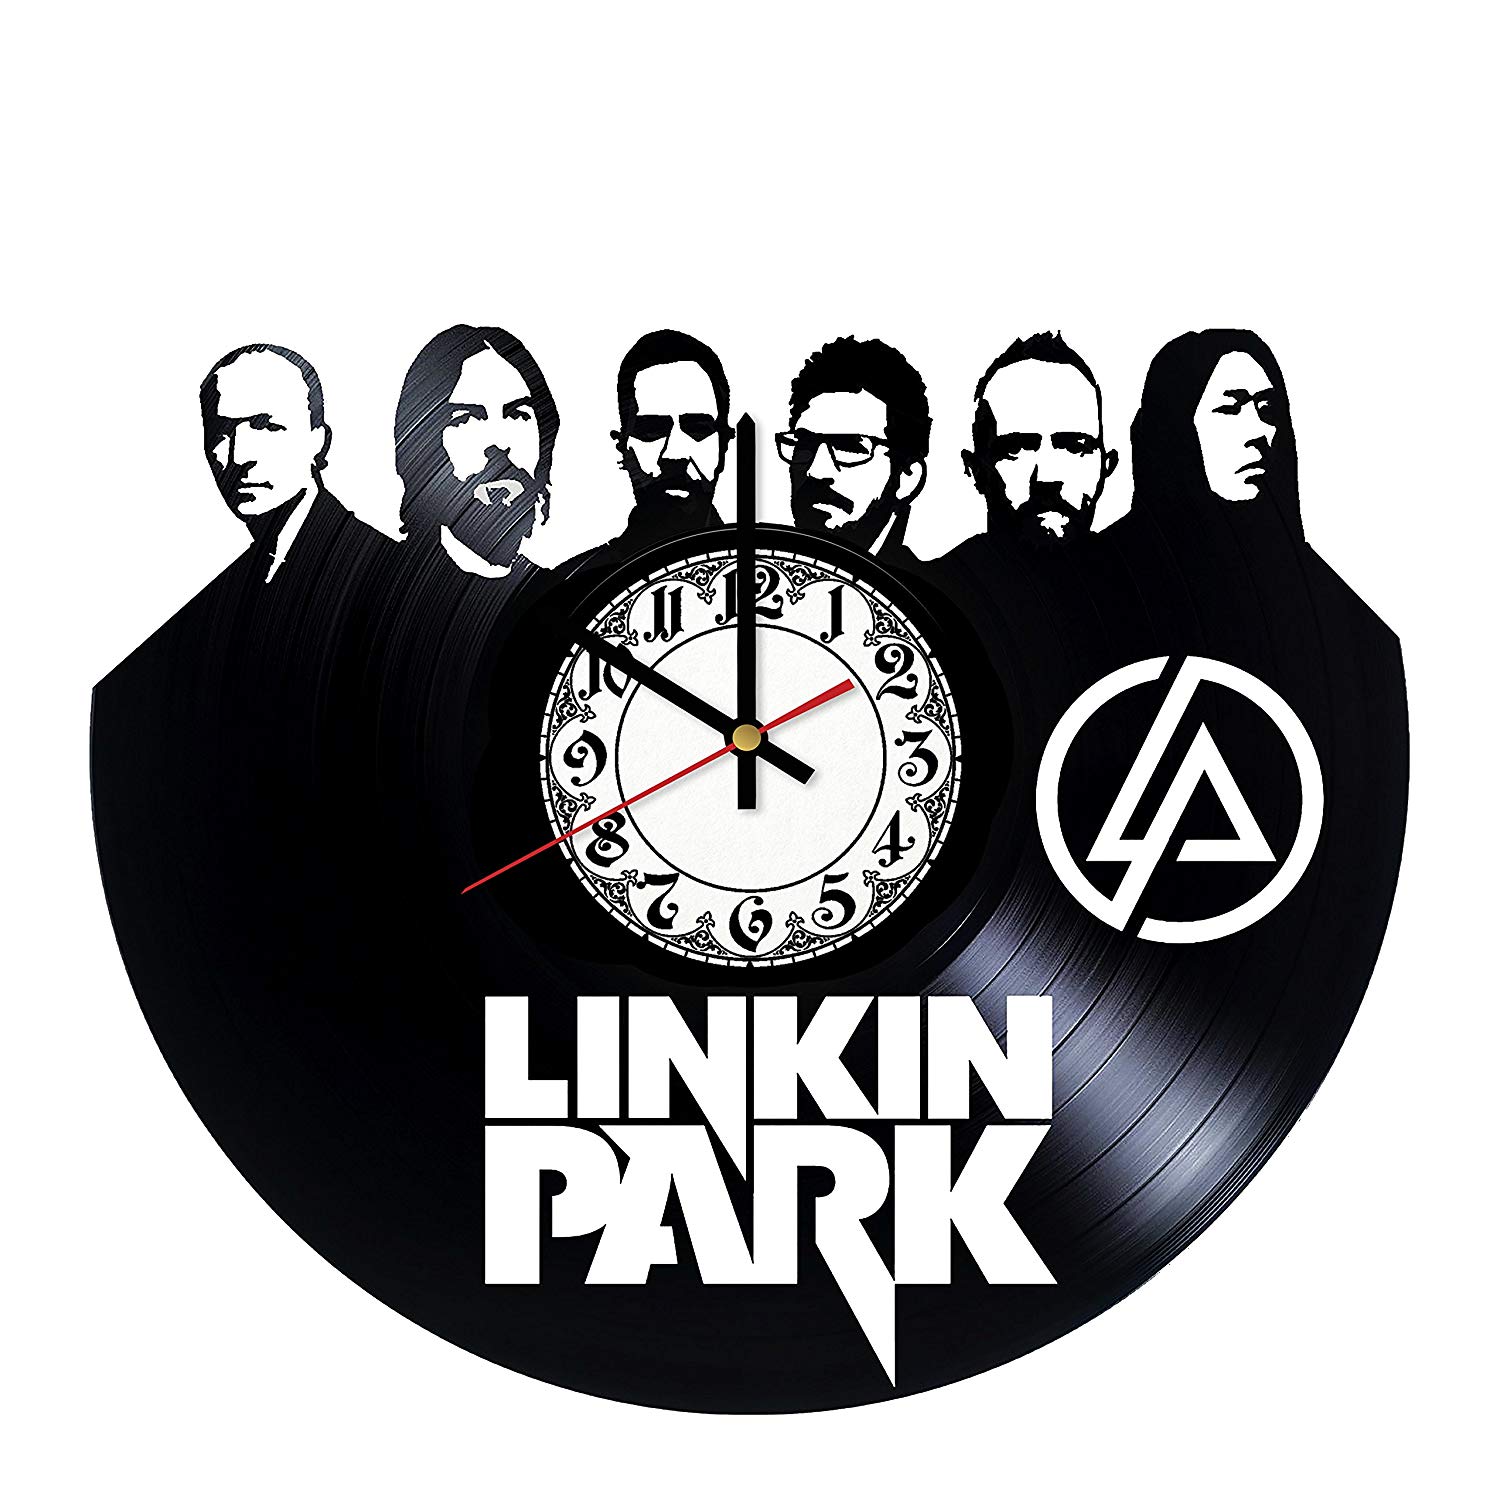 Amazon.com: Linkin Park Rock Band Design HANDMADE Vinyl.